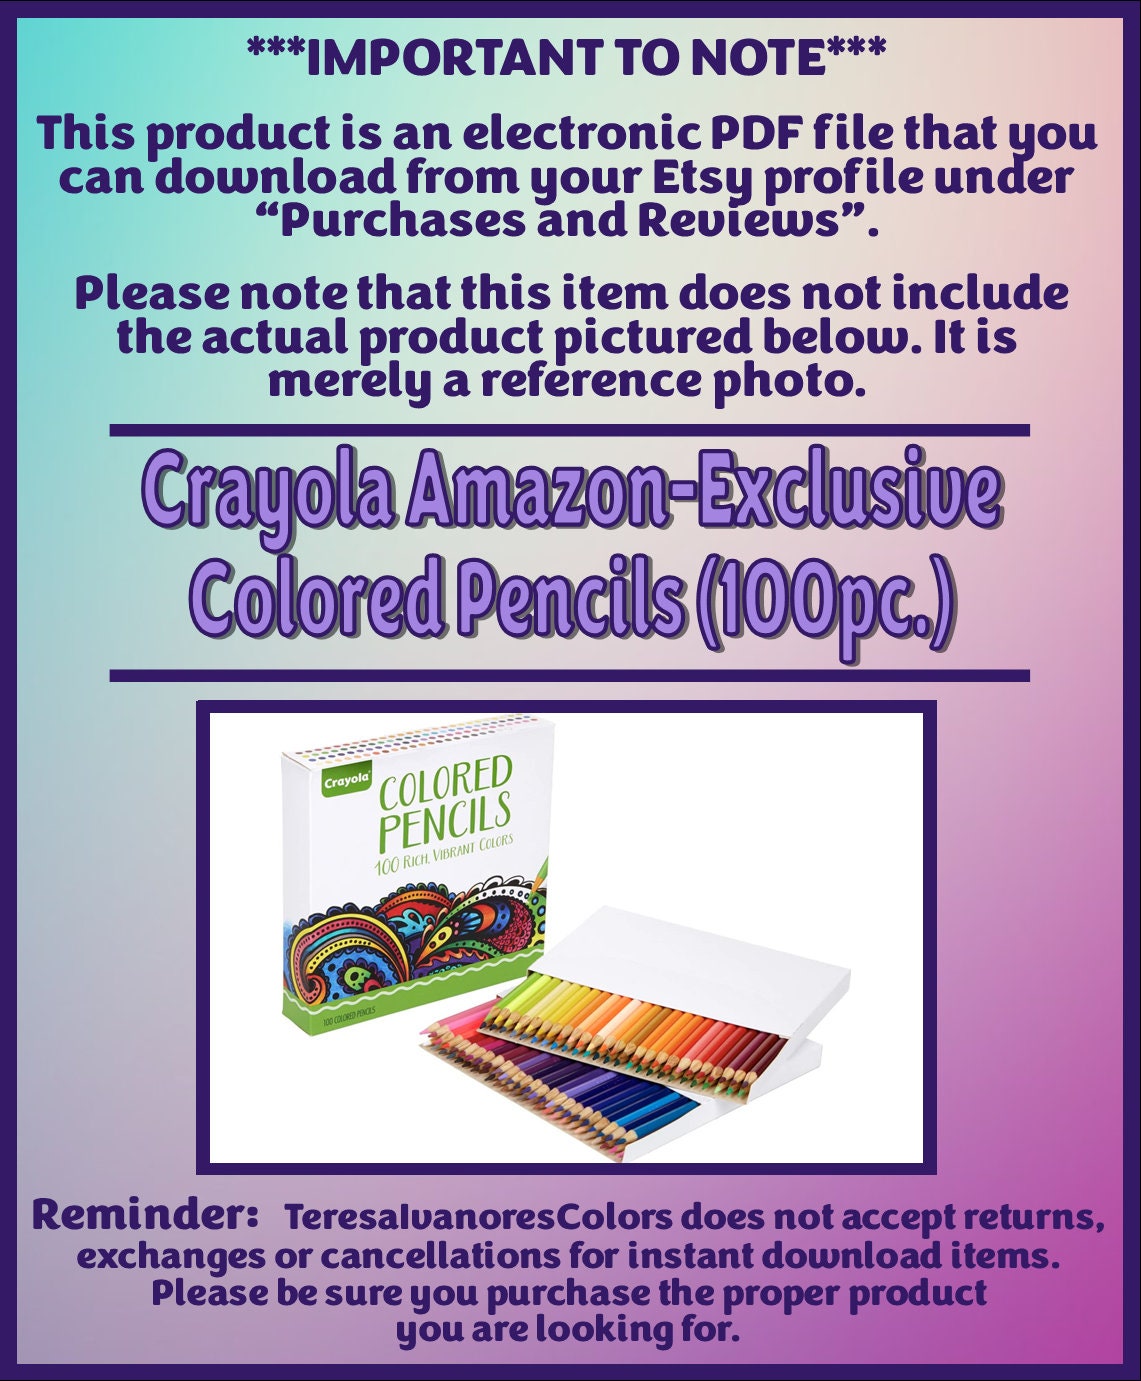 Crayola Adult Colored Pencil Set (100ct), Premium Coloring Pencils